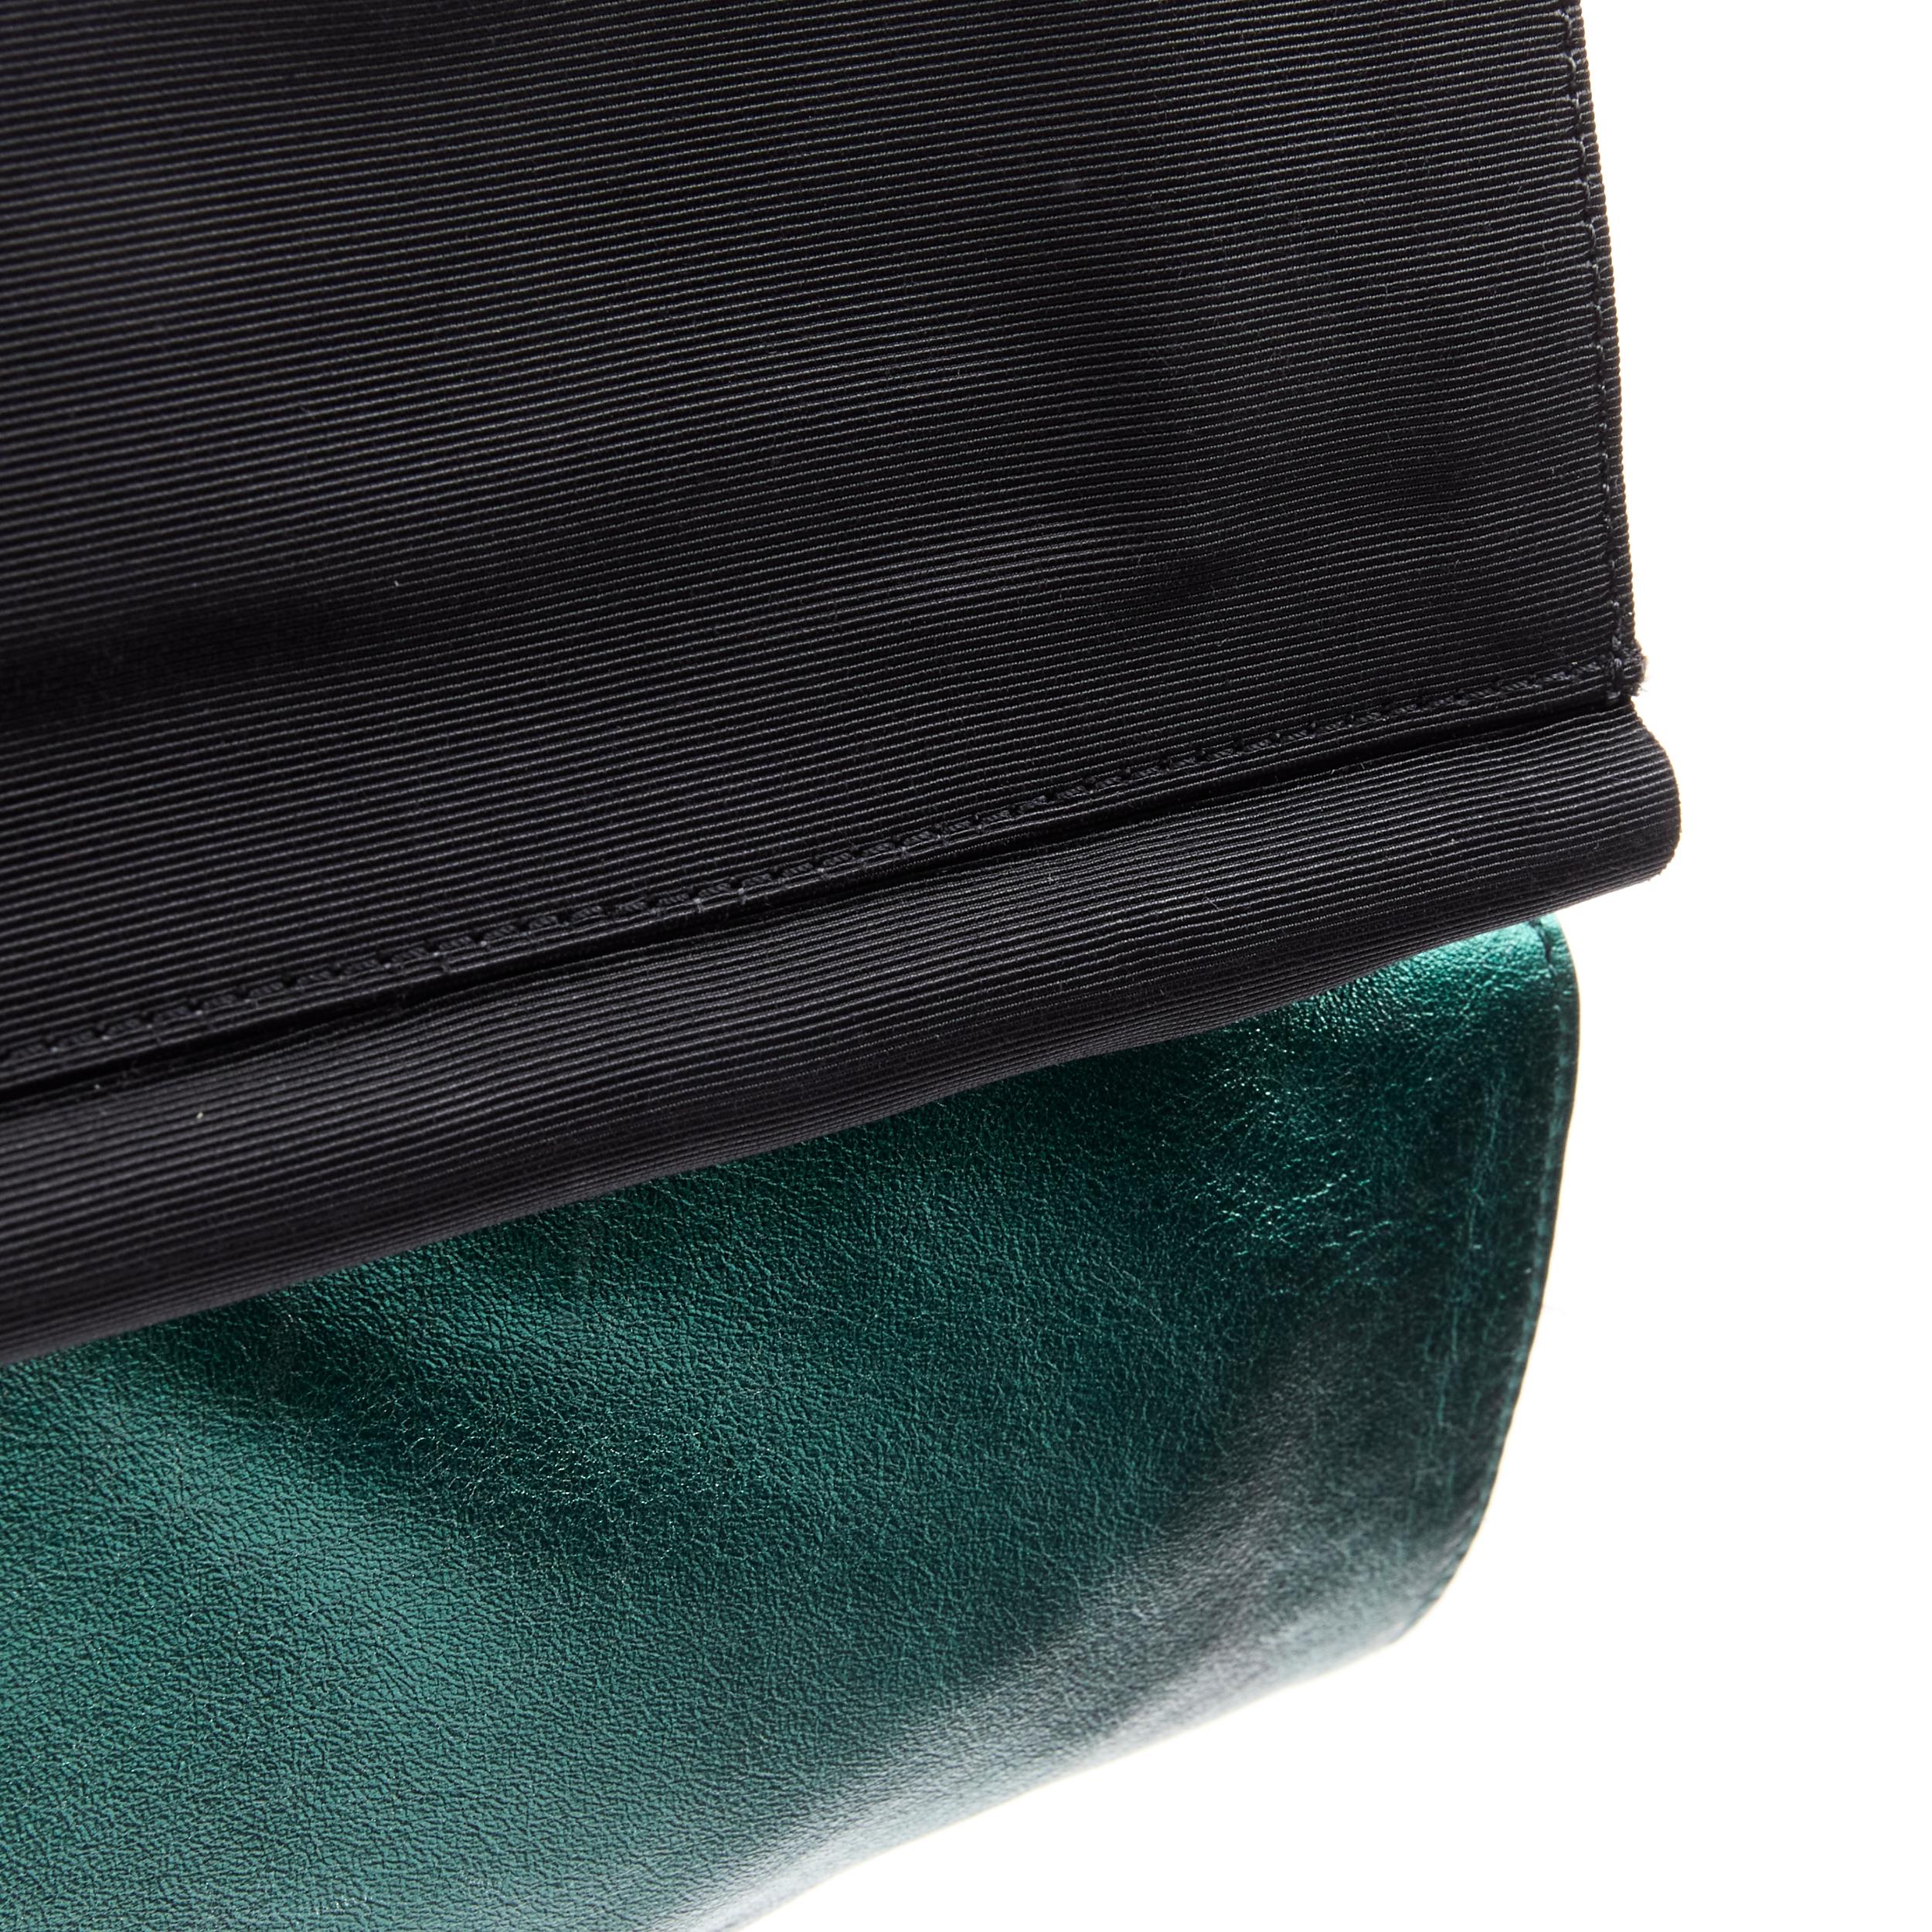 Blue DRIES VAN NOTEN metallic green soft leather black foldover crossbody clutch bag